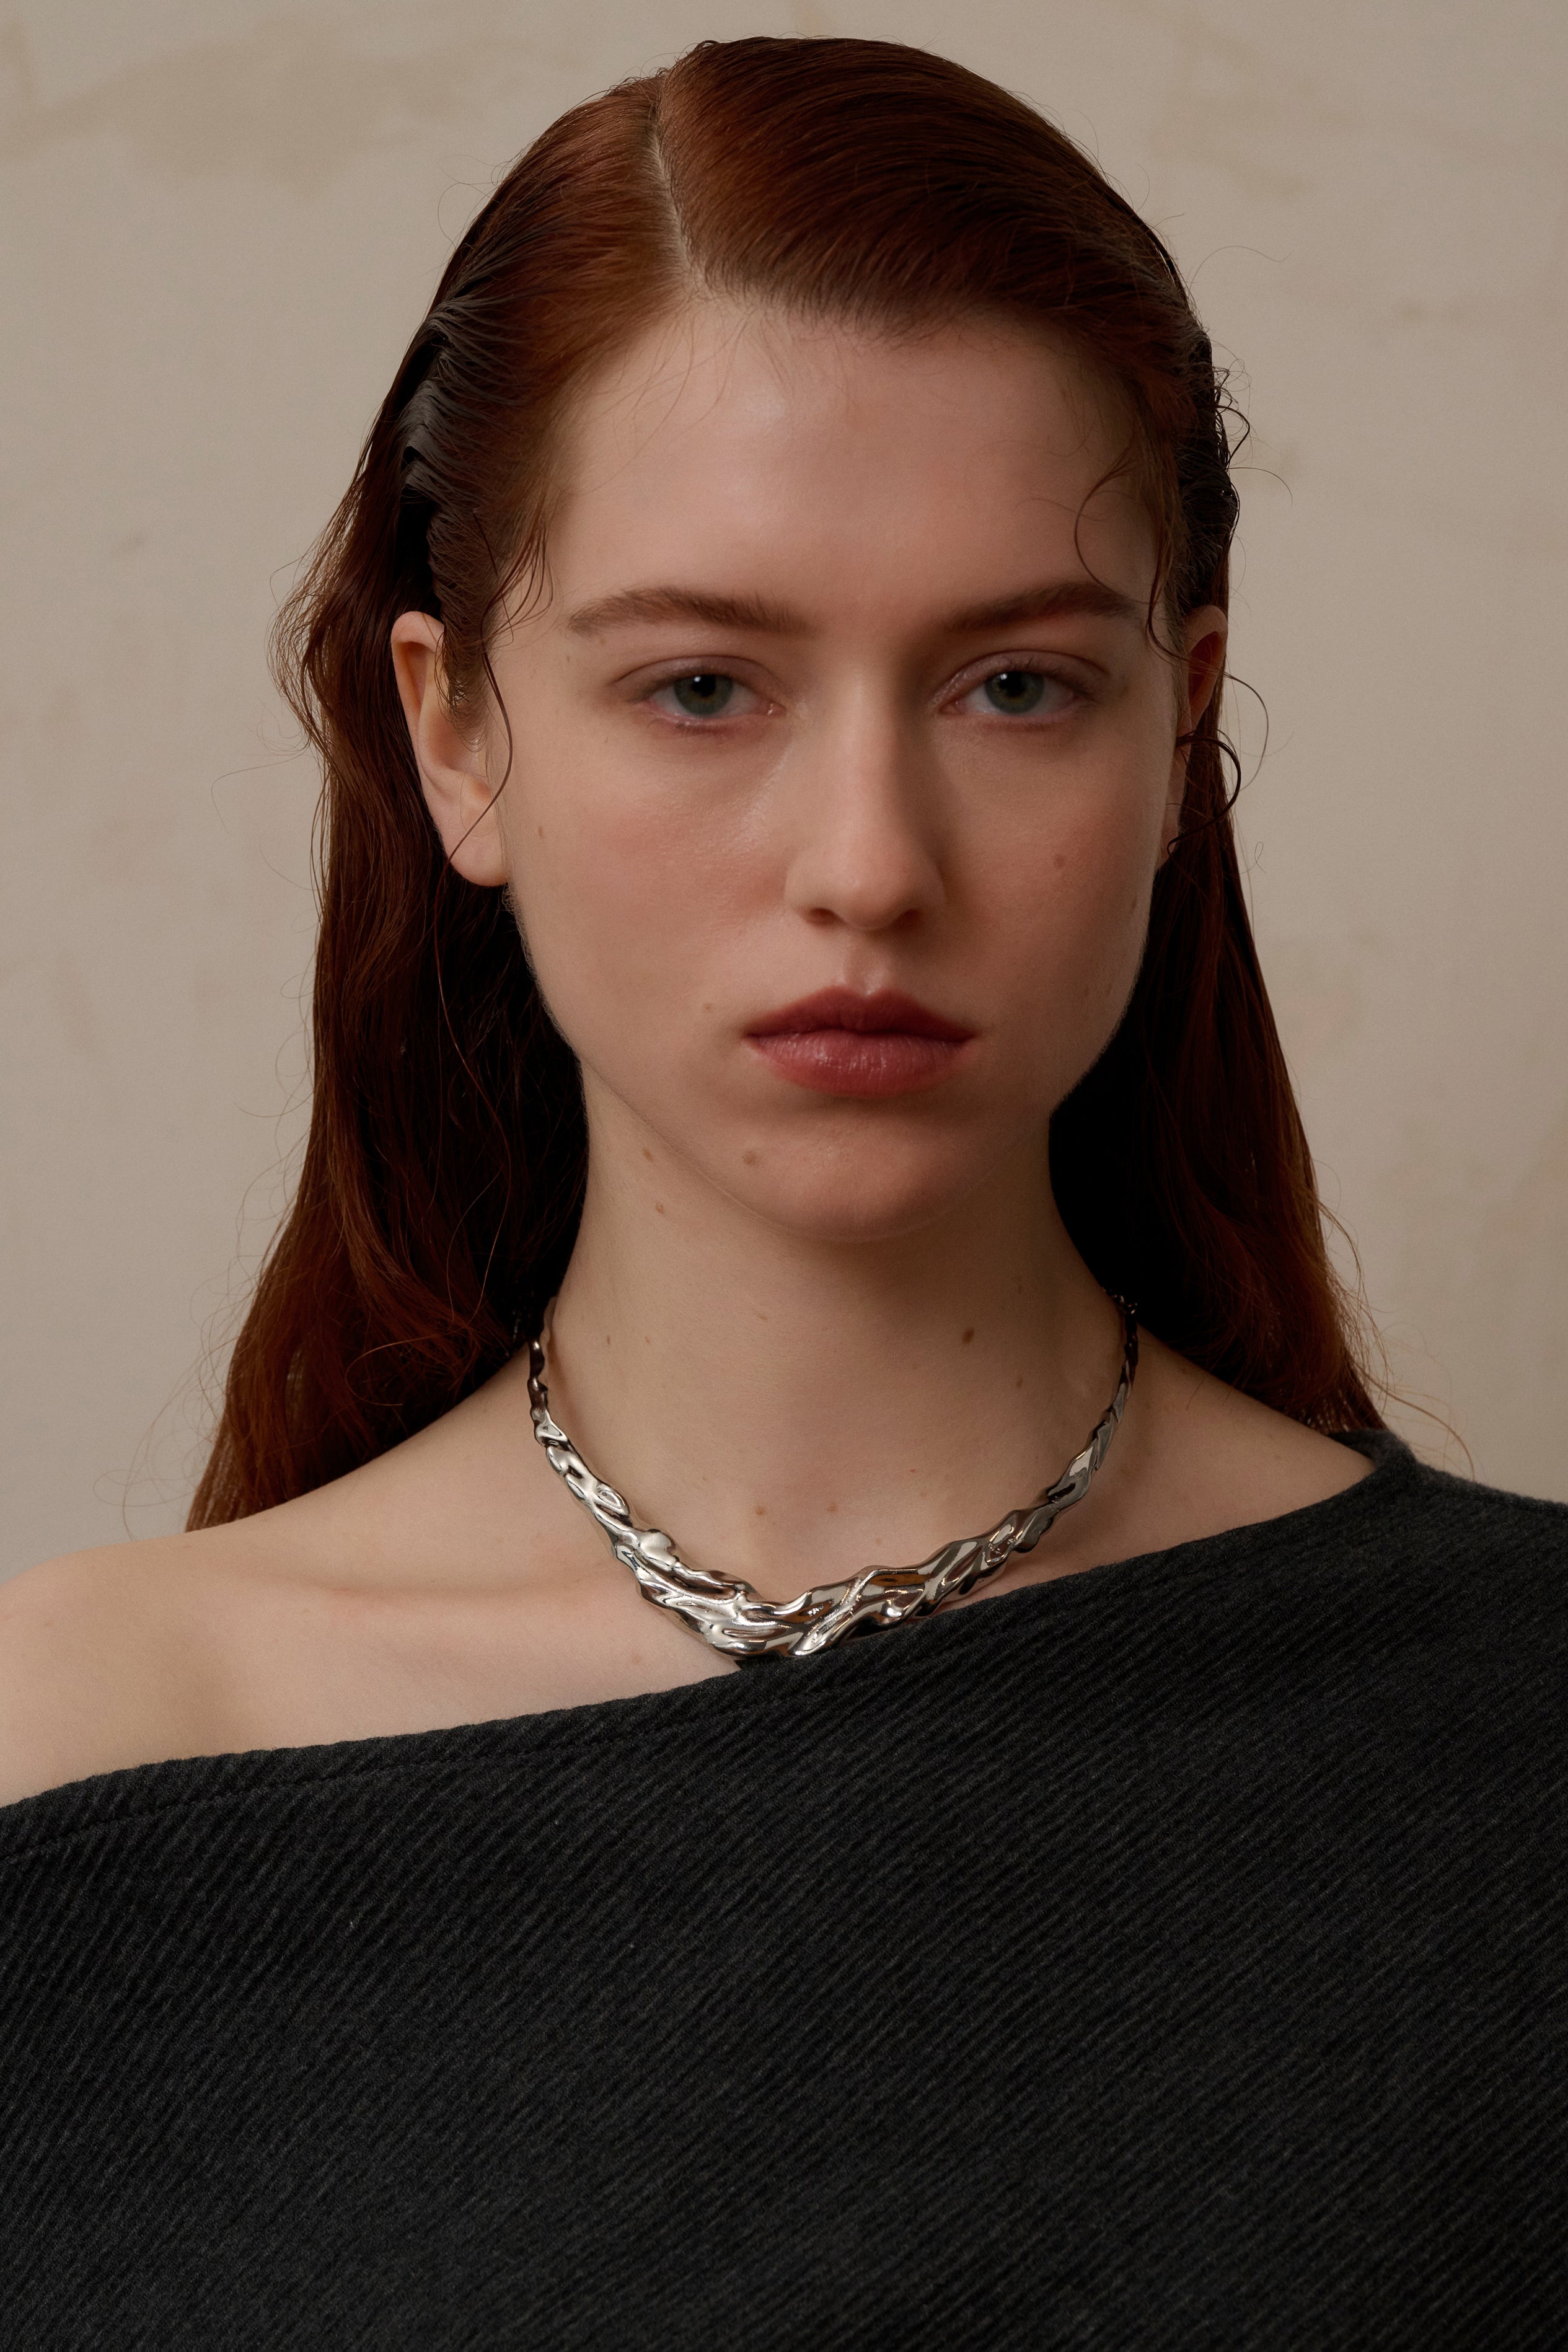 Irregular wavy necklace